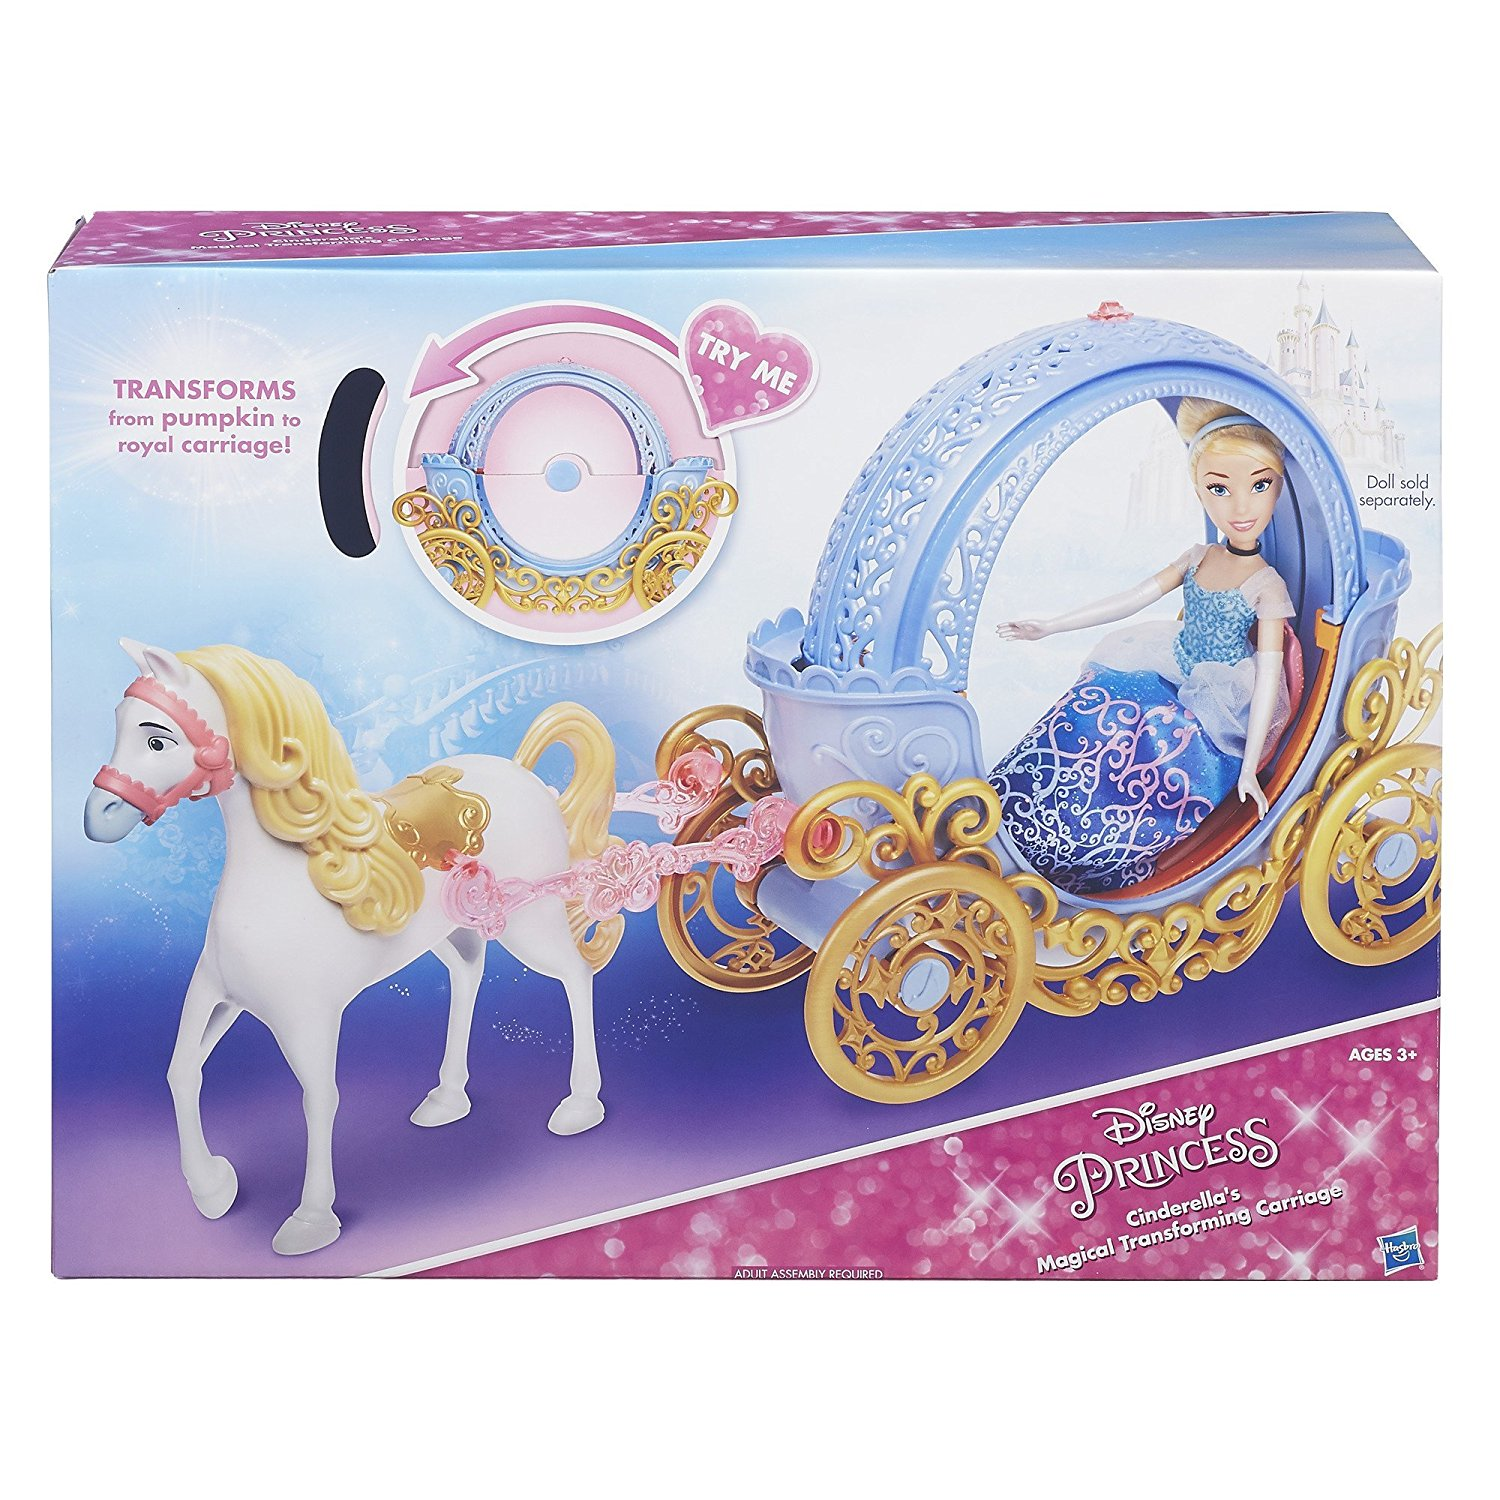 Disney Princess Cinderella’s Magical Transforming Carriage Just $19.99!